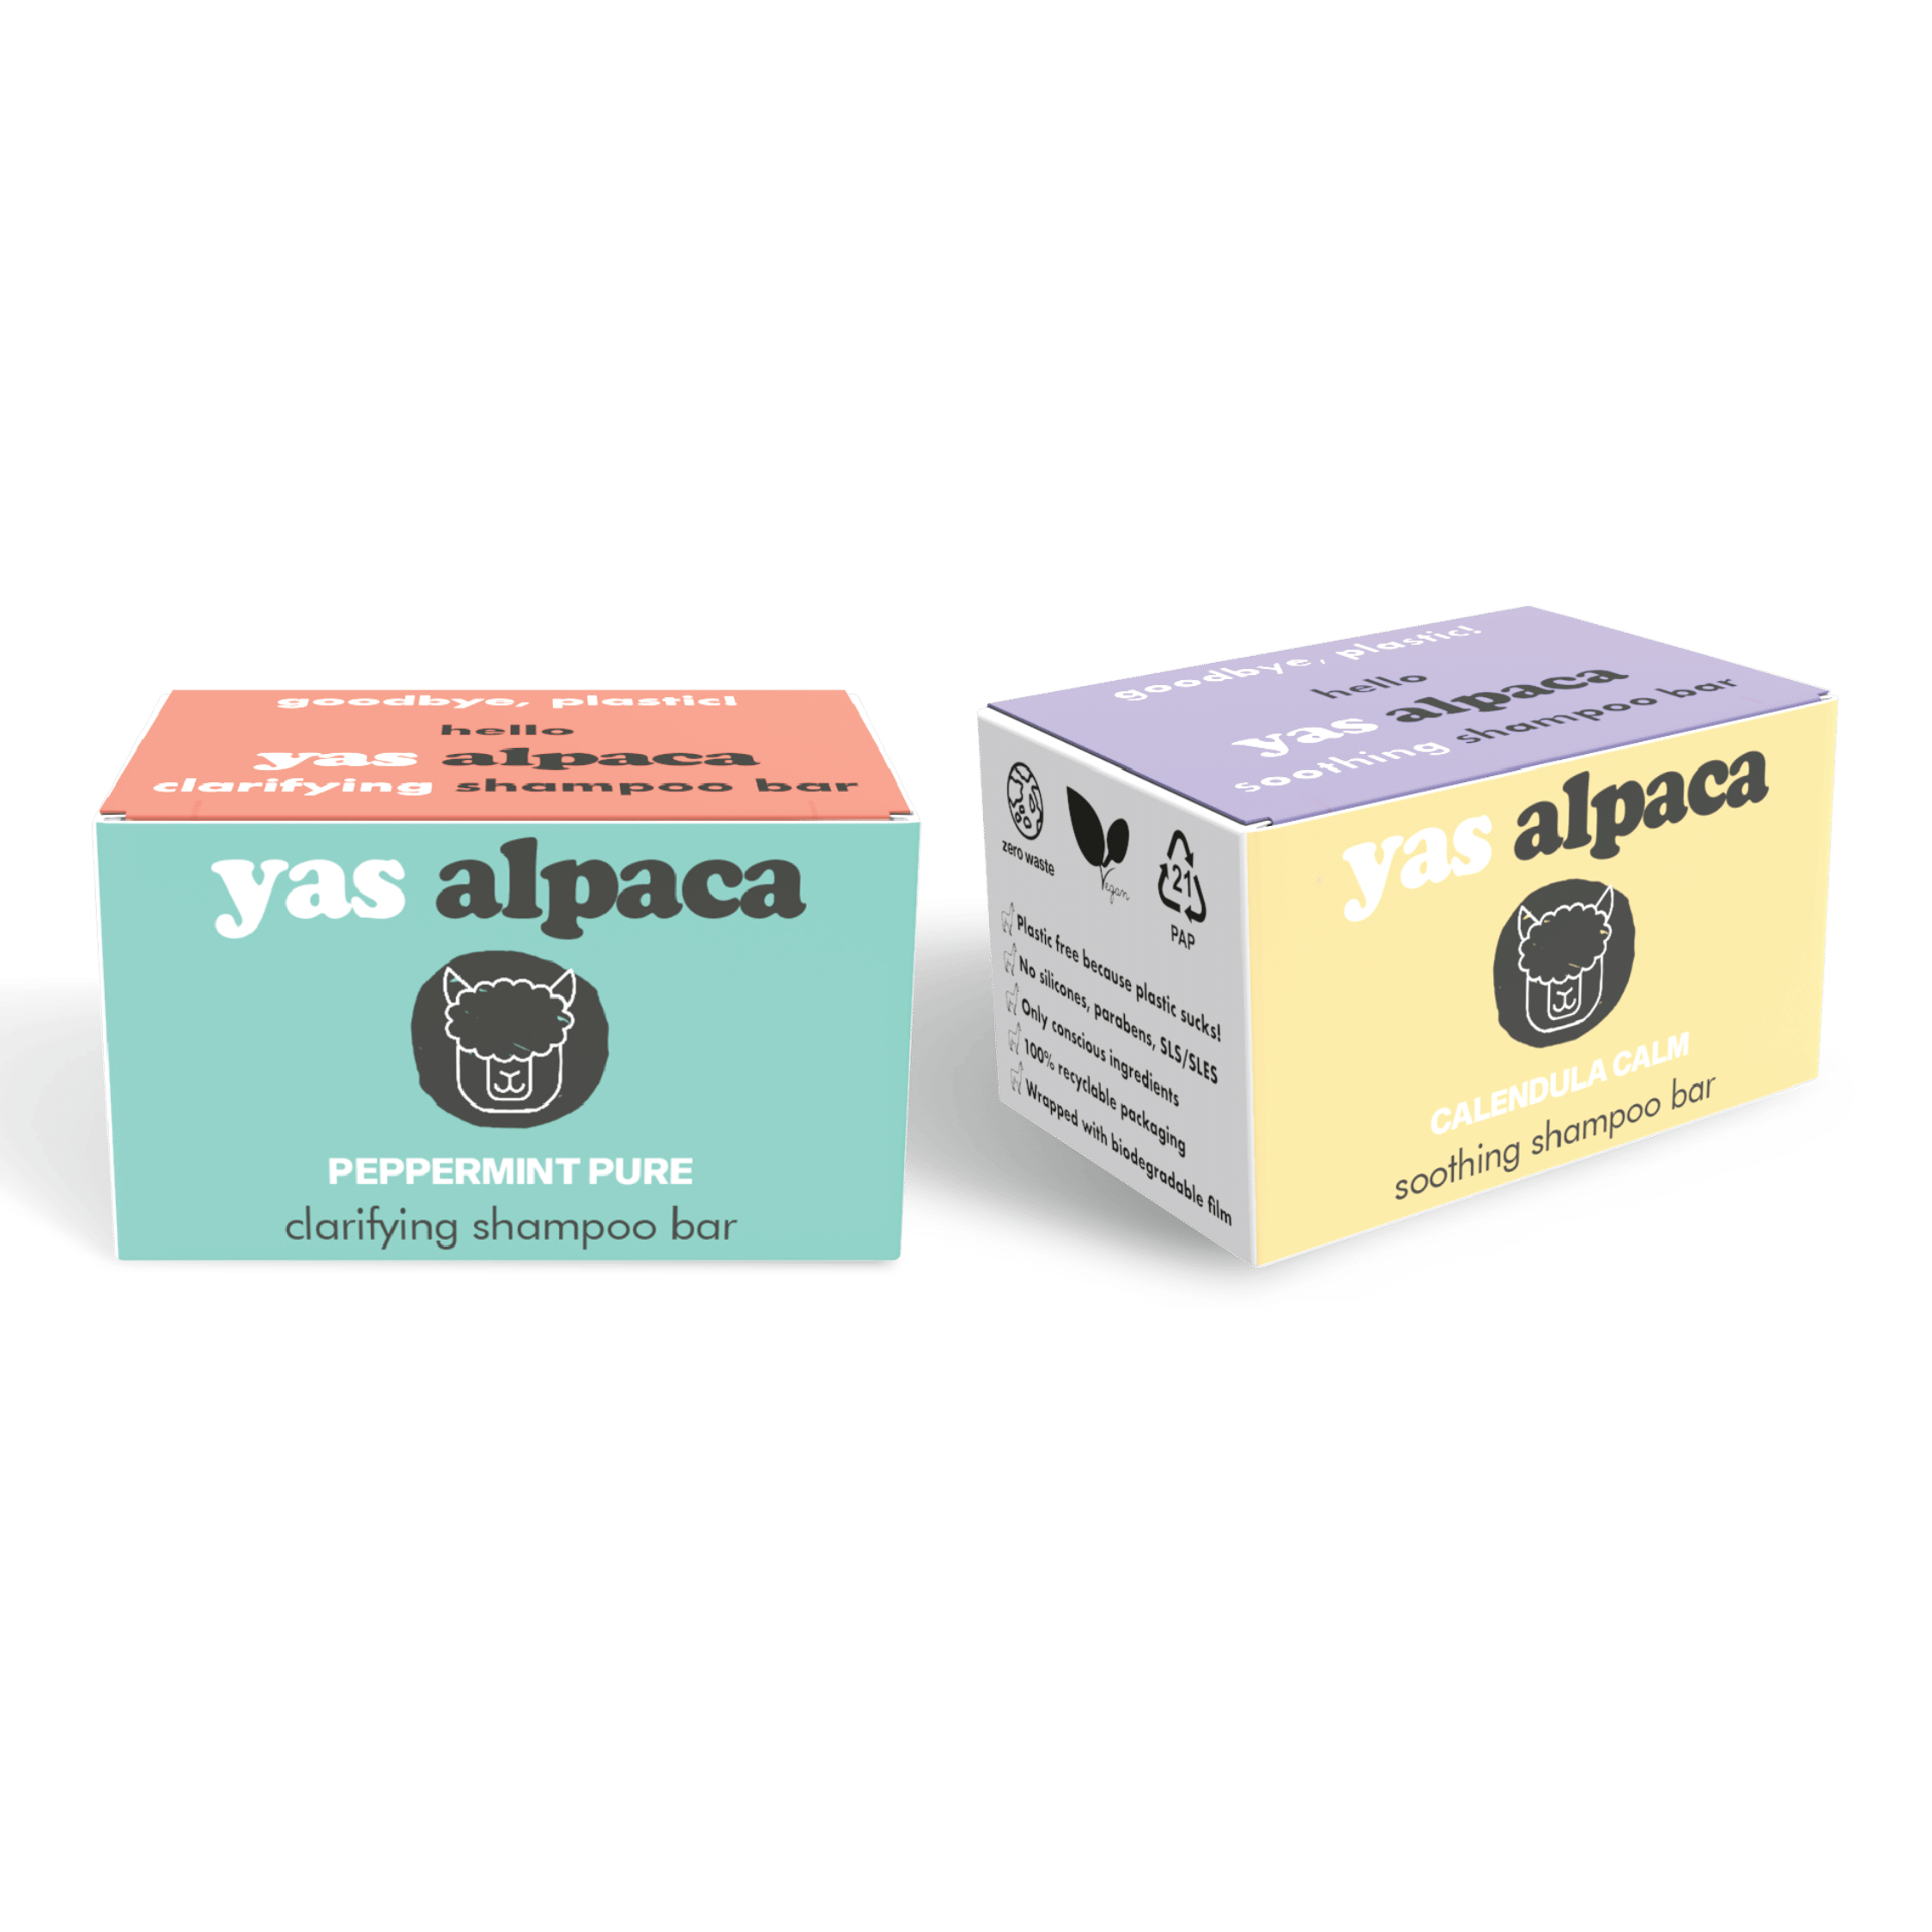 Packaging boxes of Yas Alpaca's Peppermint Pure clarifying shampoo bar and Calendula Calm soothing shampoo bar. 